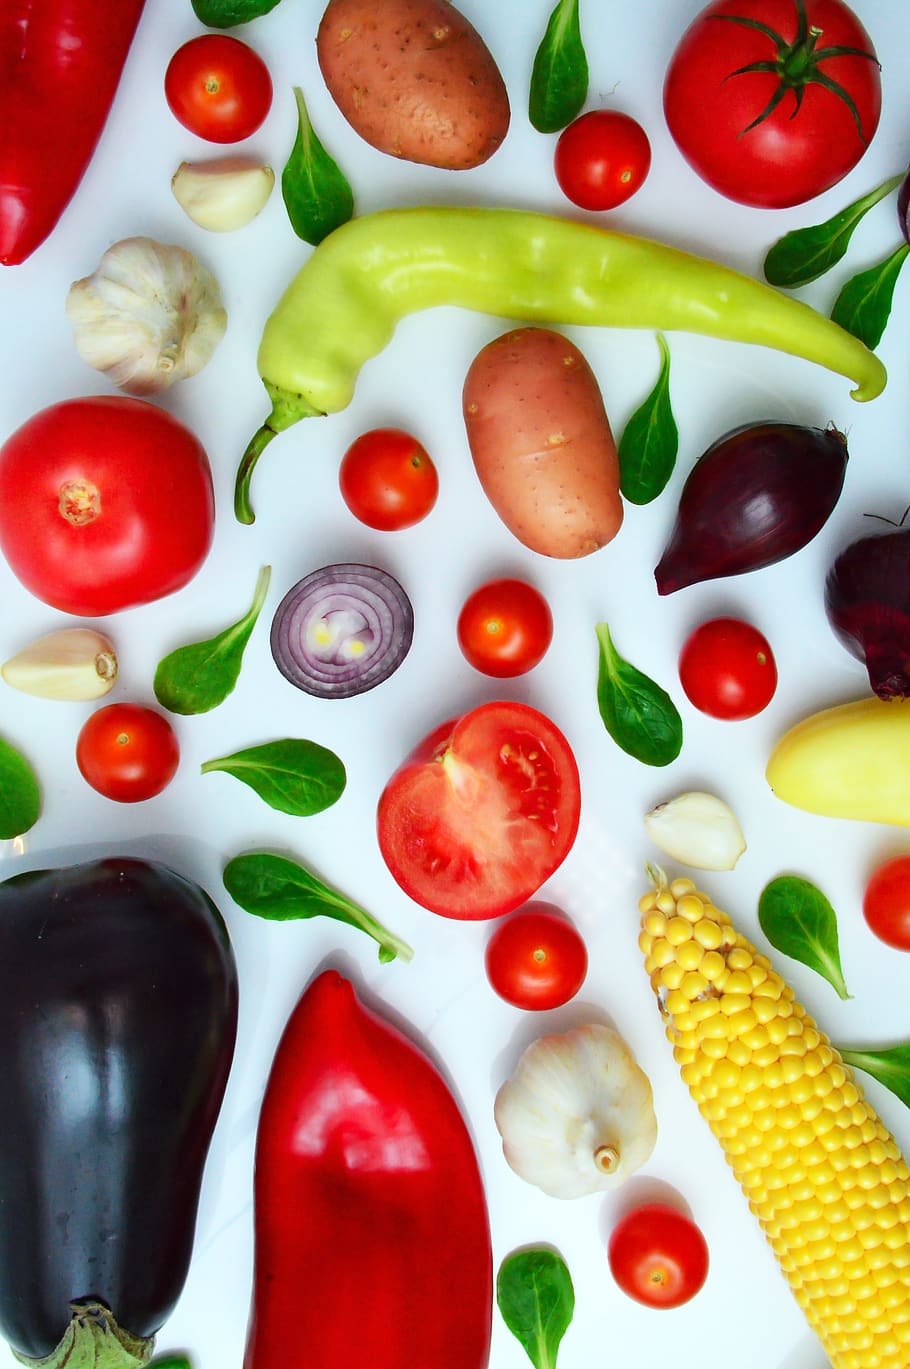 sayuran, lada, tomat bawang gokhagyma, ungu, vitamin, vegetarian, makanan, sehat, mentah, hijau